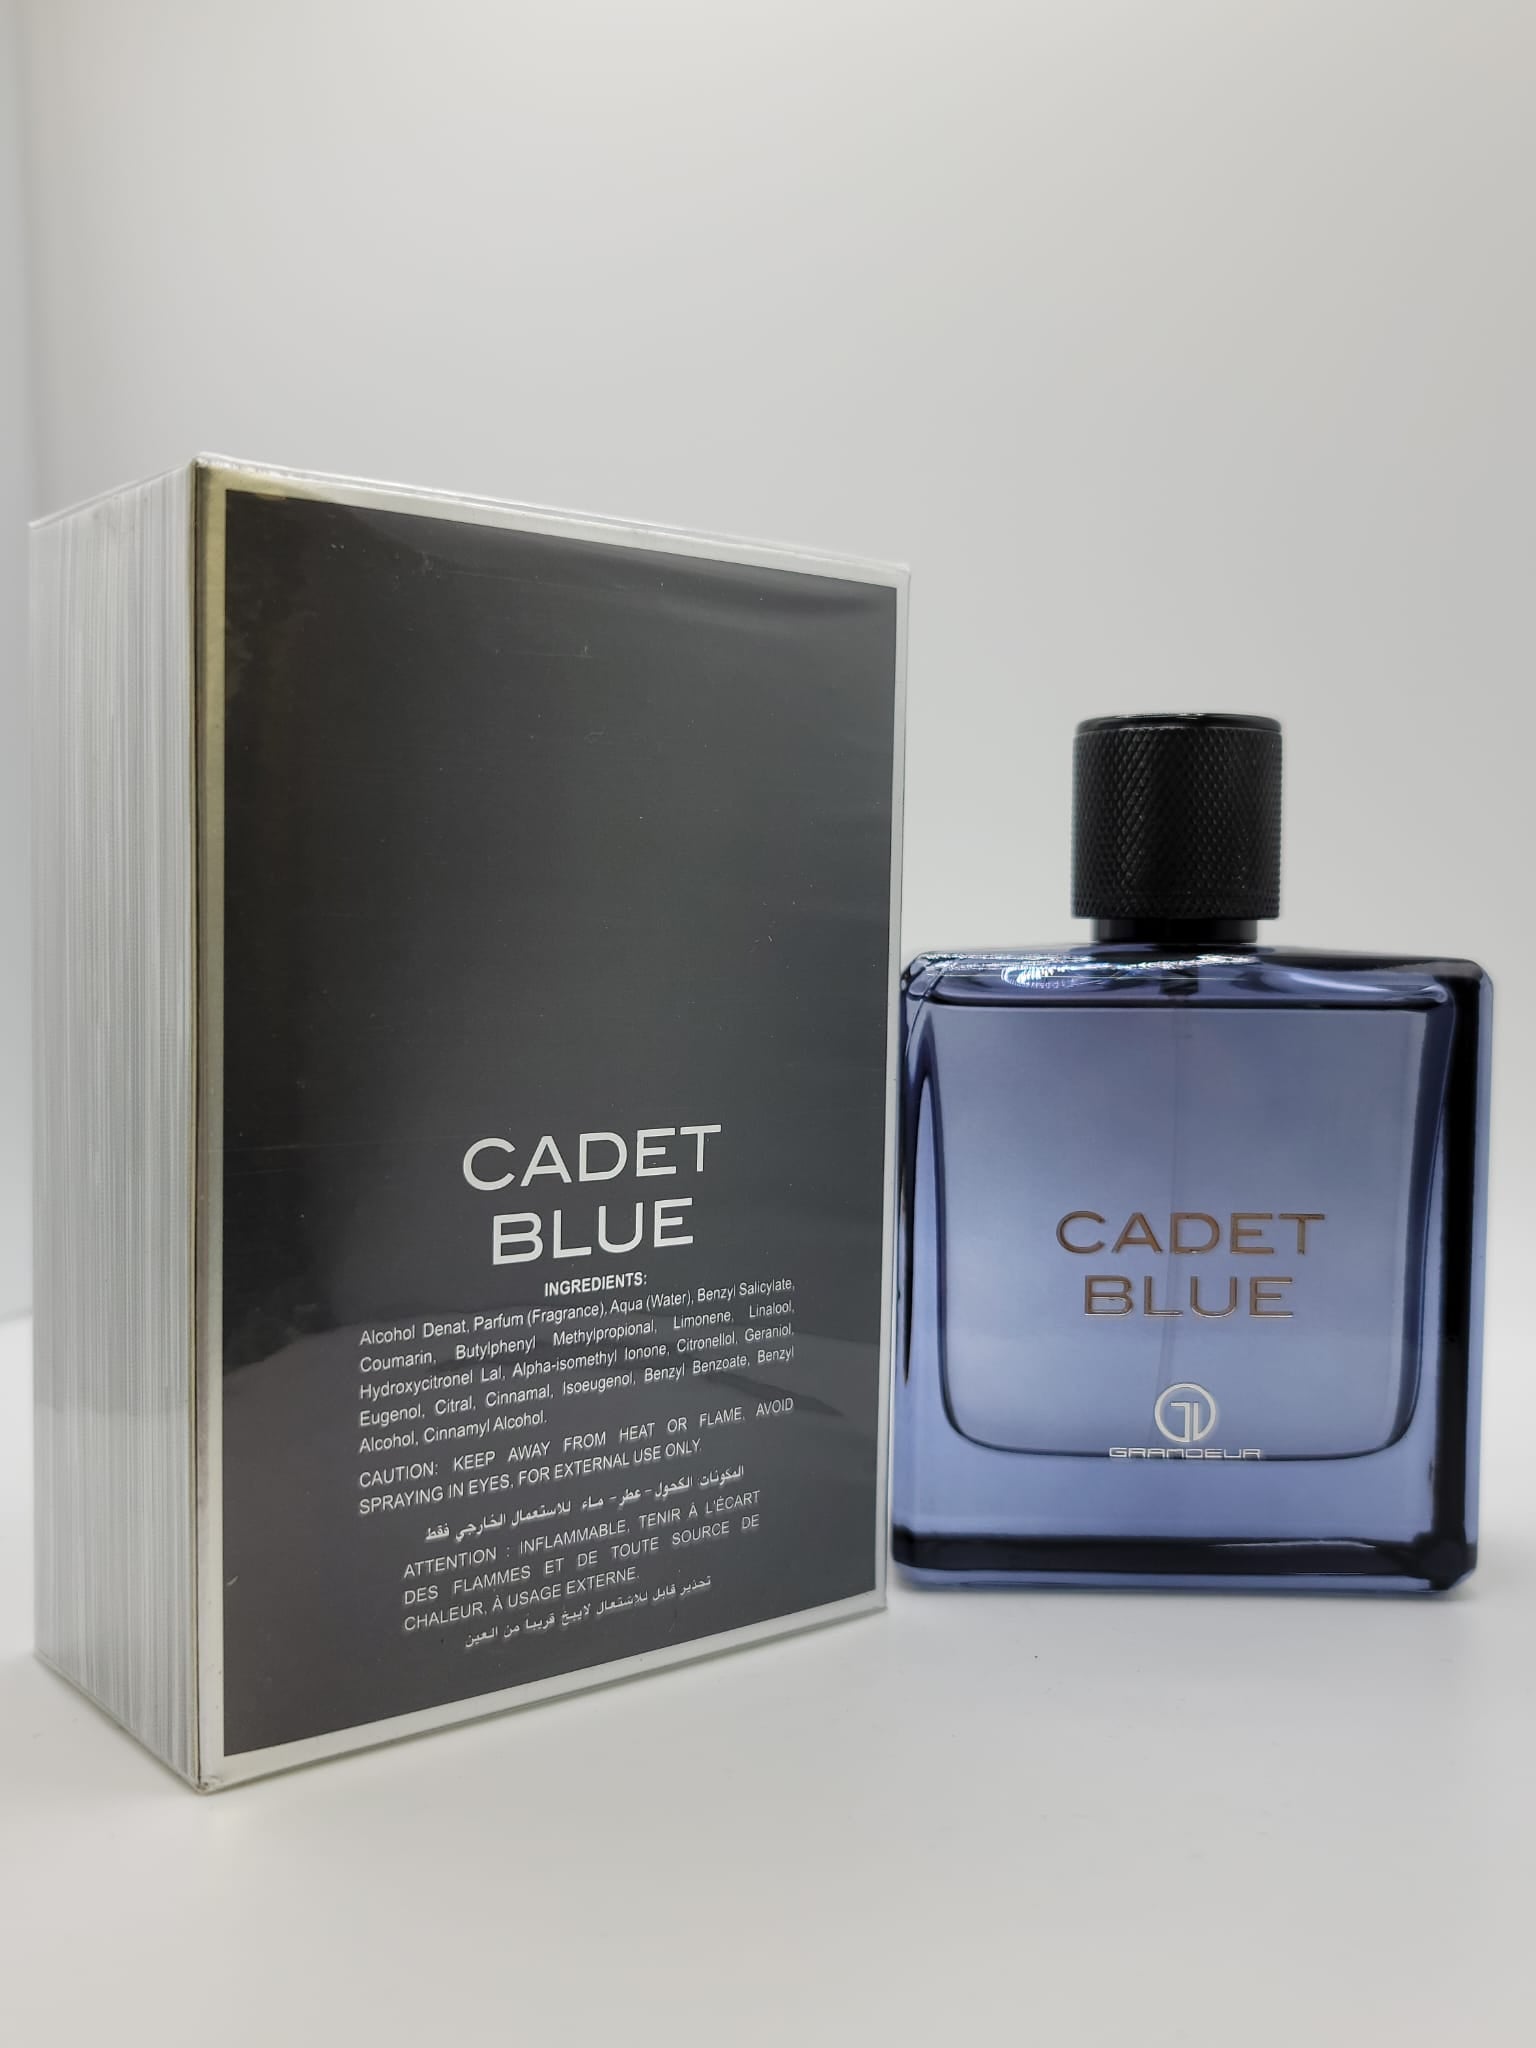 Blue De Chance Alhambra Original EDP Perfume Men 100 ML Super Rich Fragrance